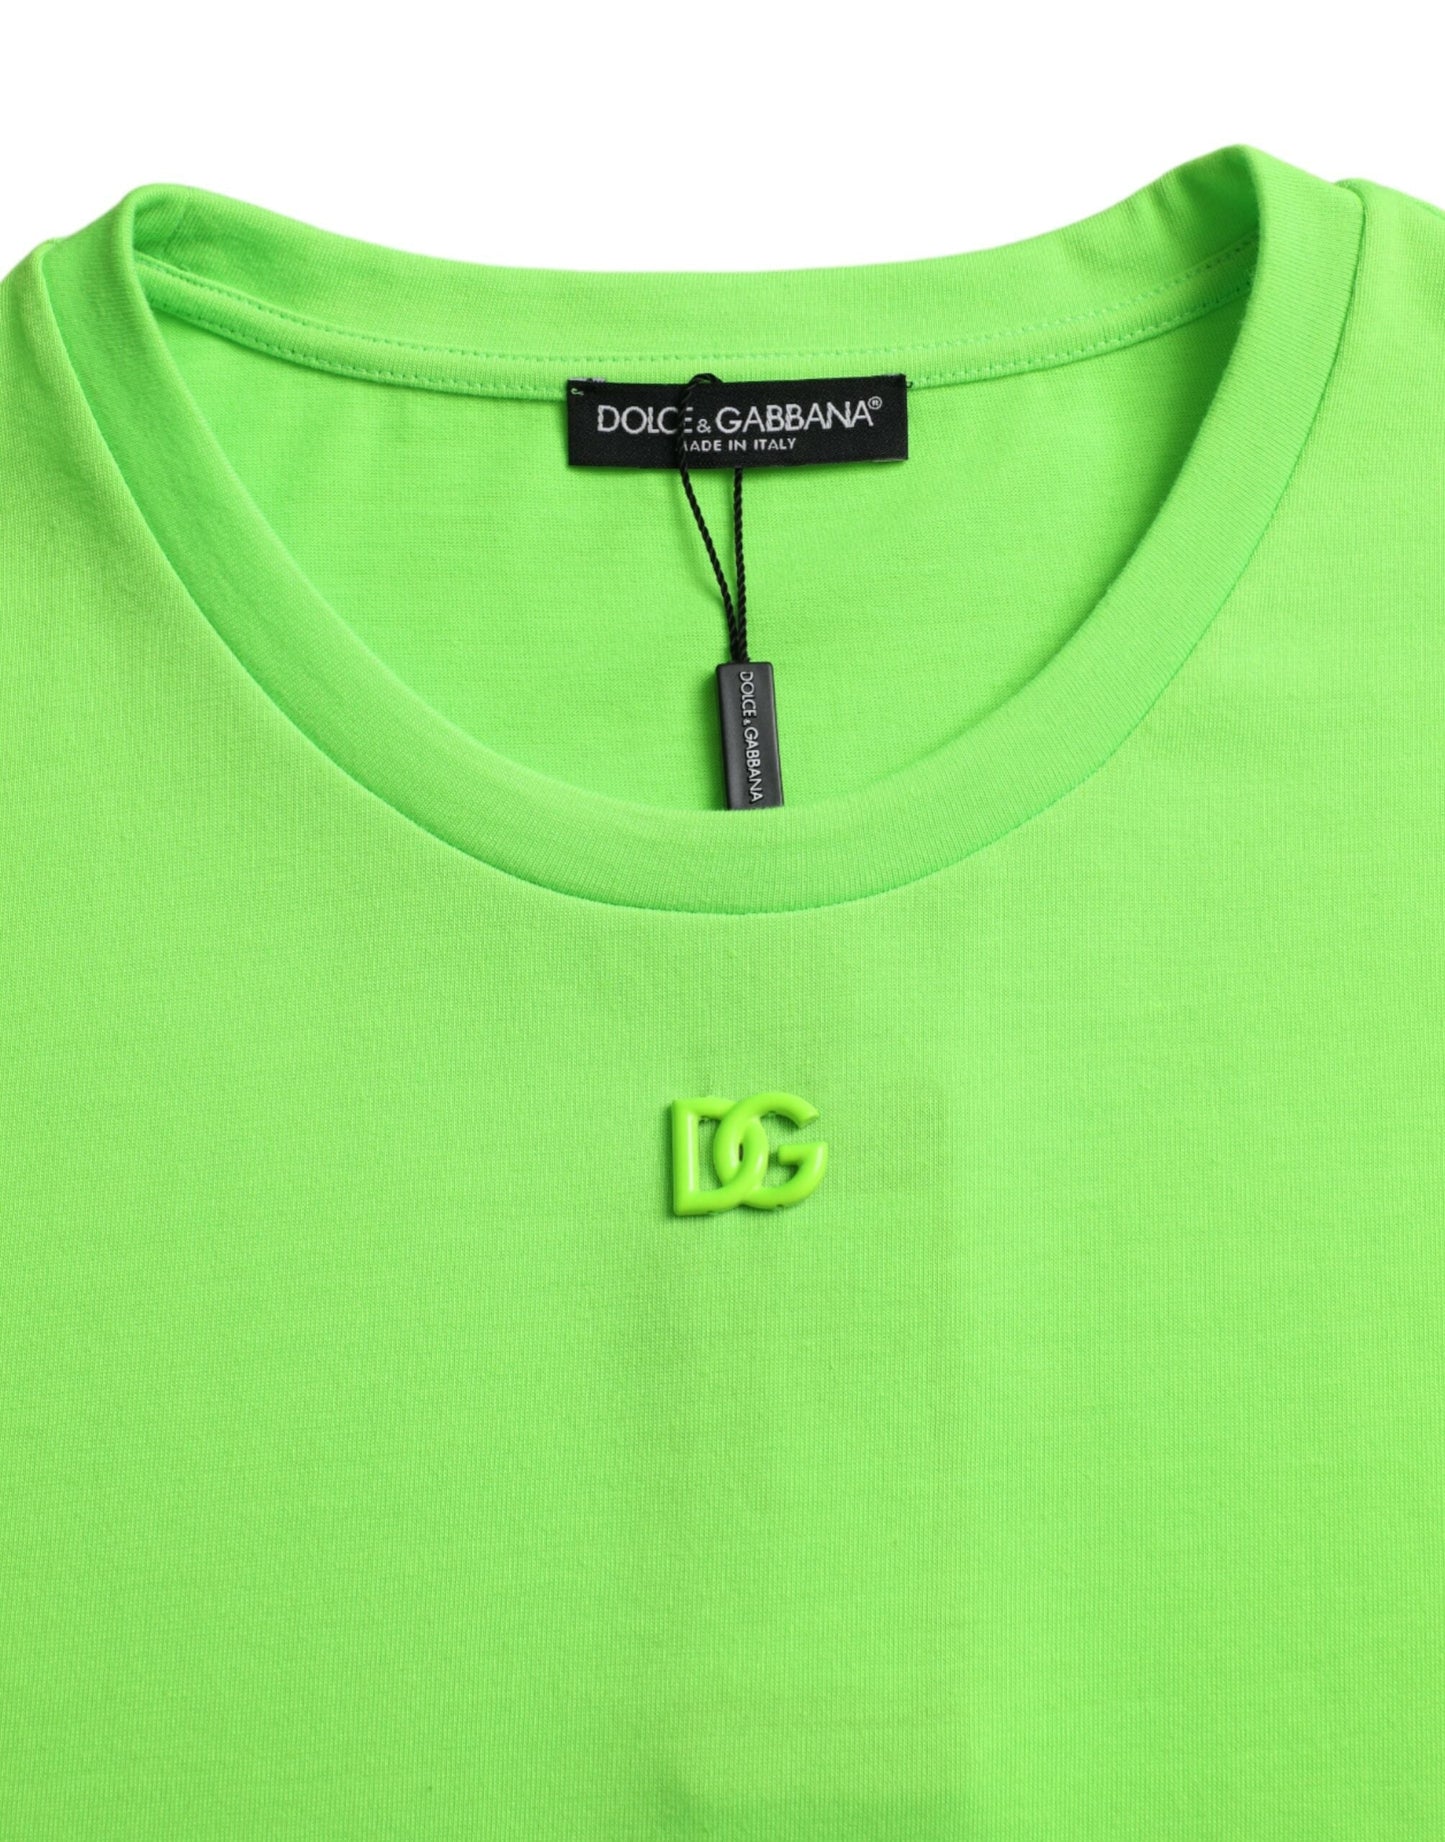 Dolce & Gabbana Neon Green Embossed Logo Crew Neck T-shirt | Fashionsarah.com